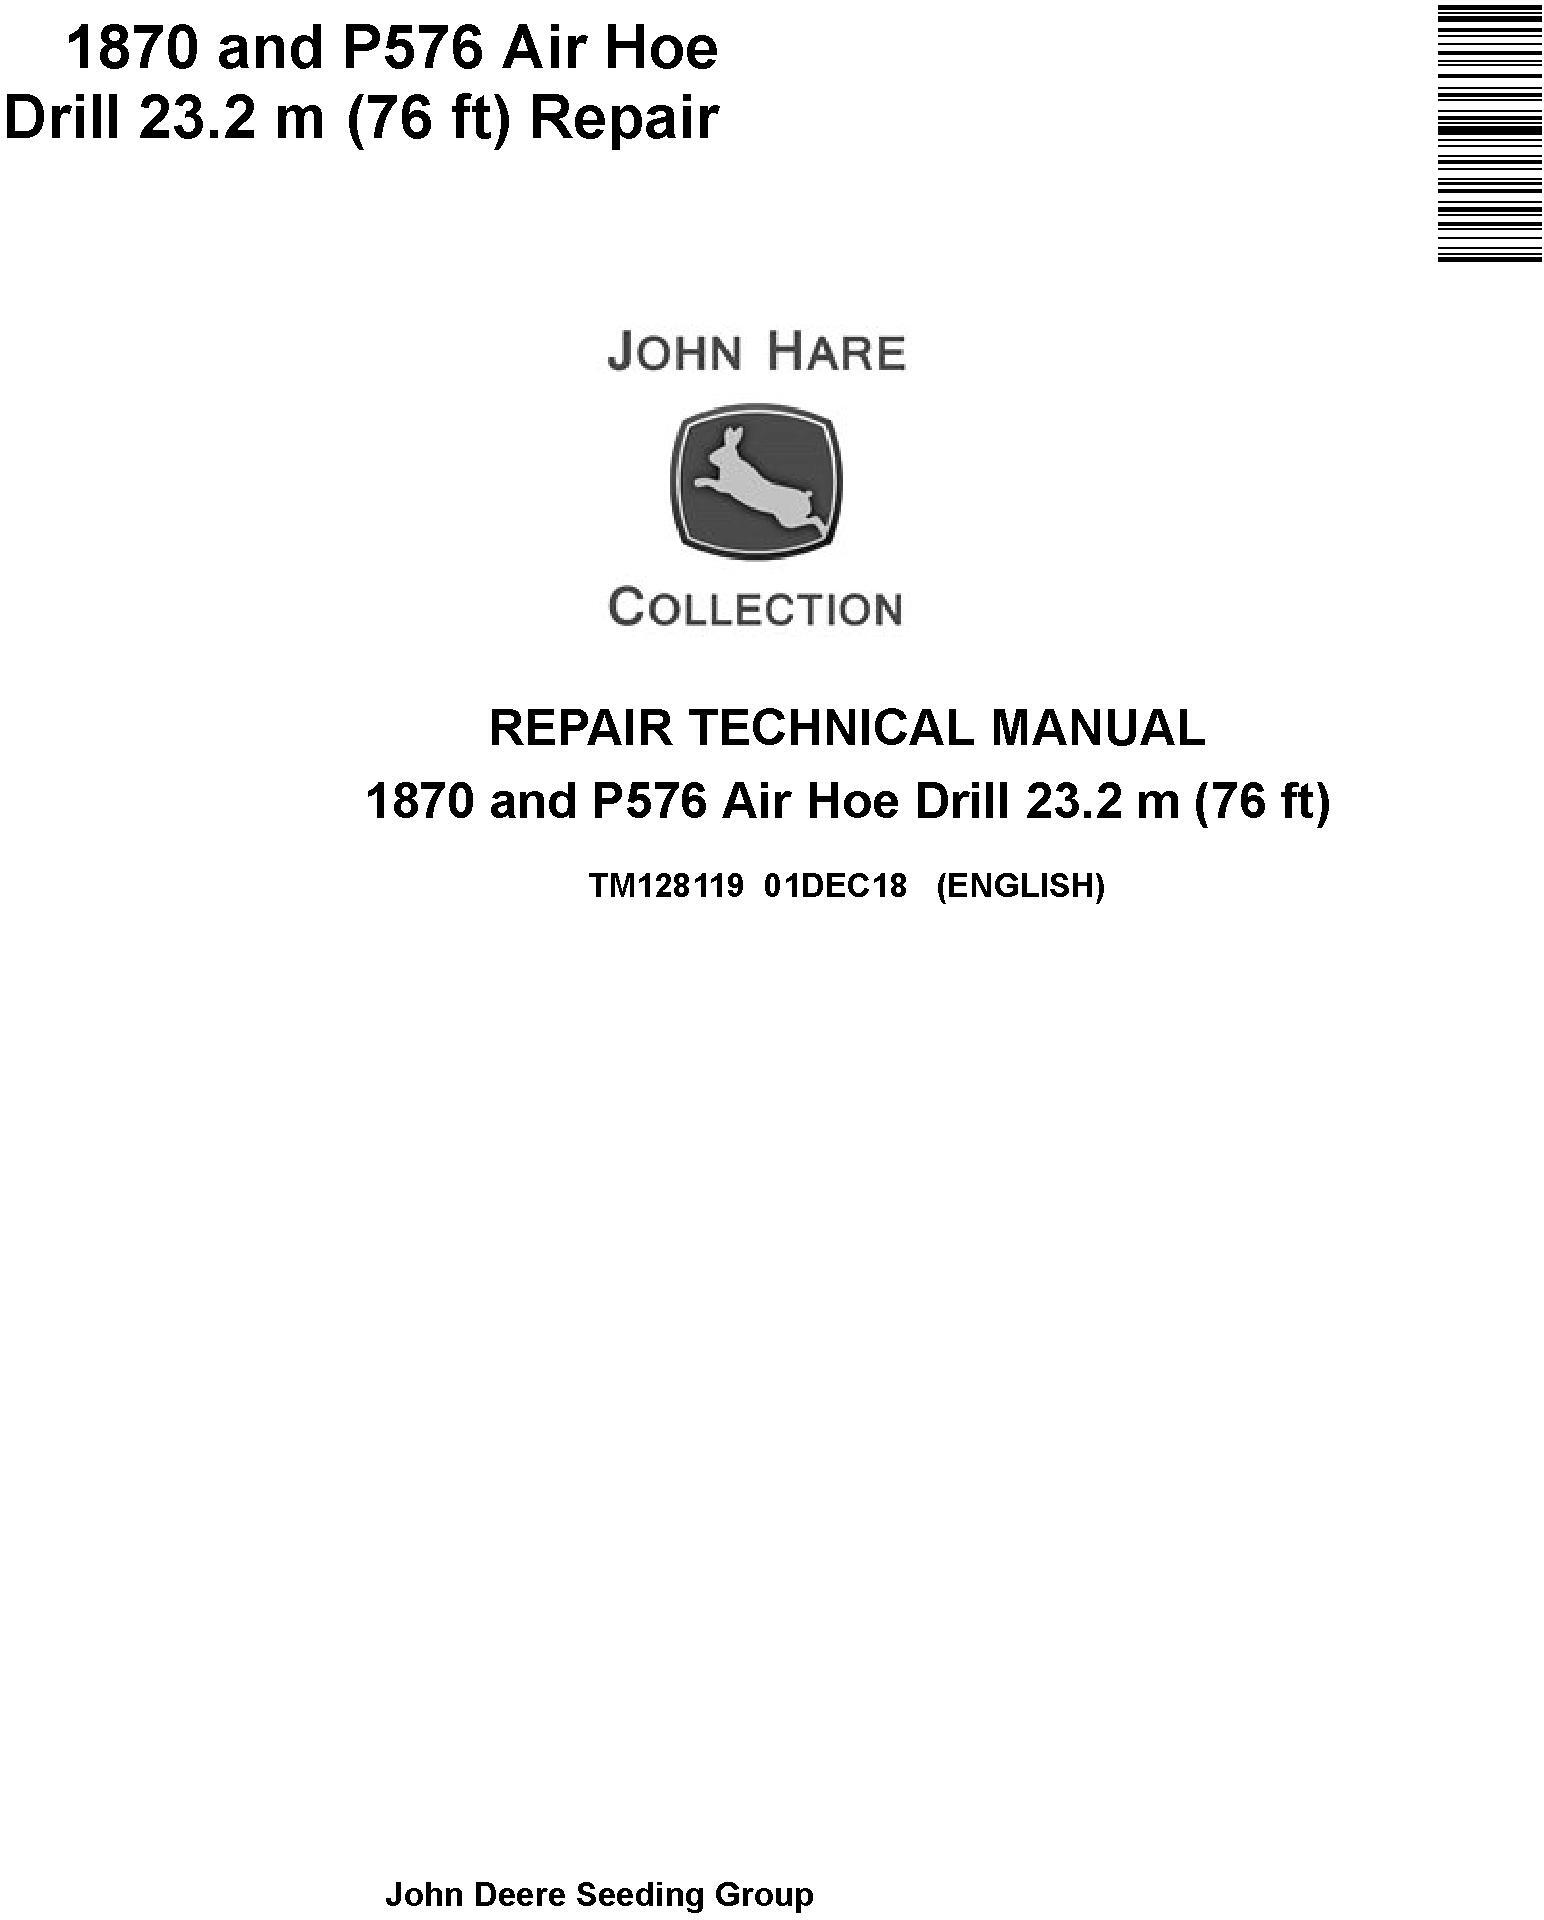 John Deere 1870 P576 Air Hoe Drill 23.2 m 76 ft Repair Technical Manual TM128119